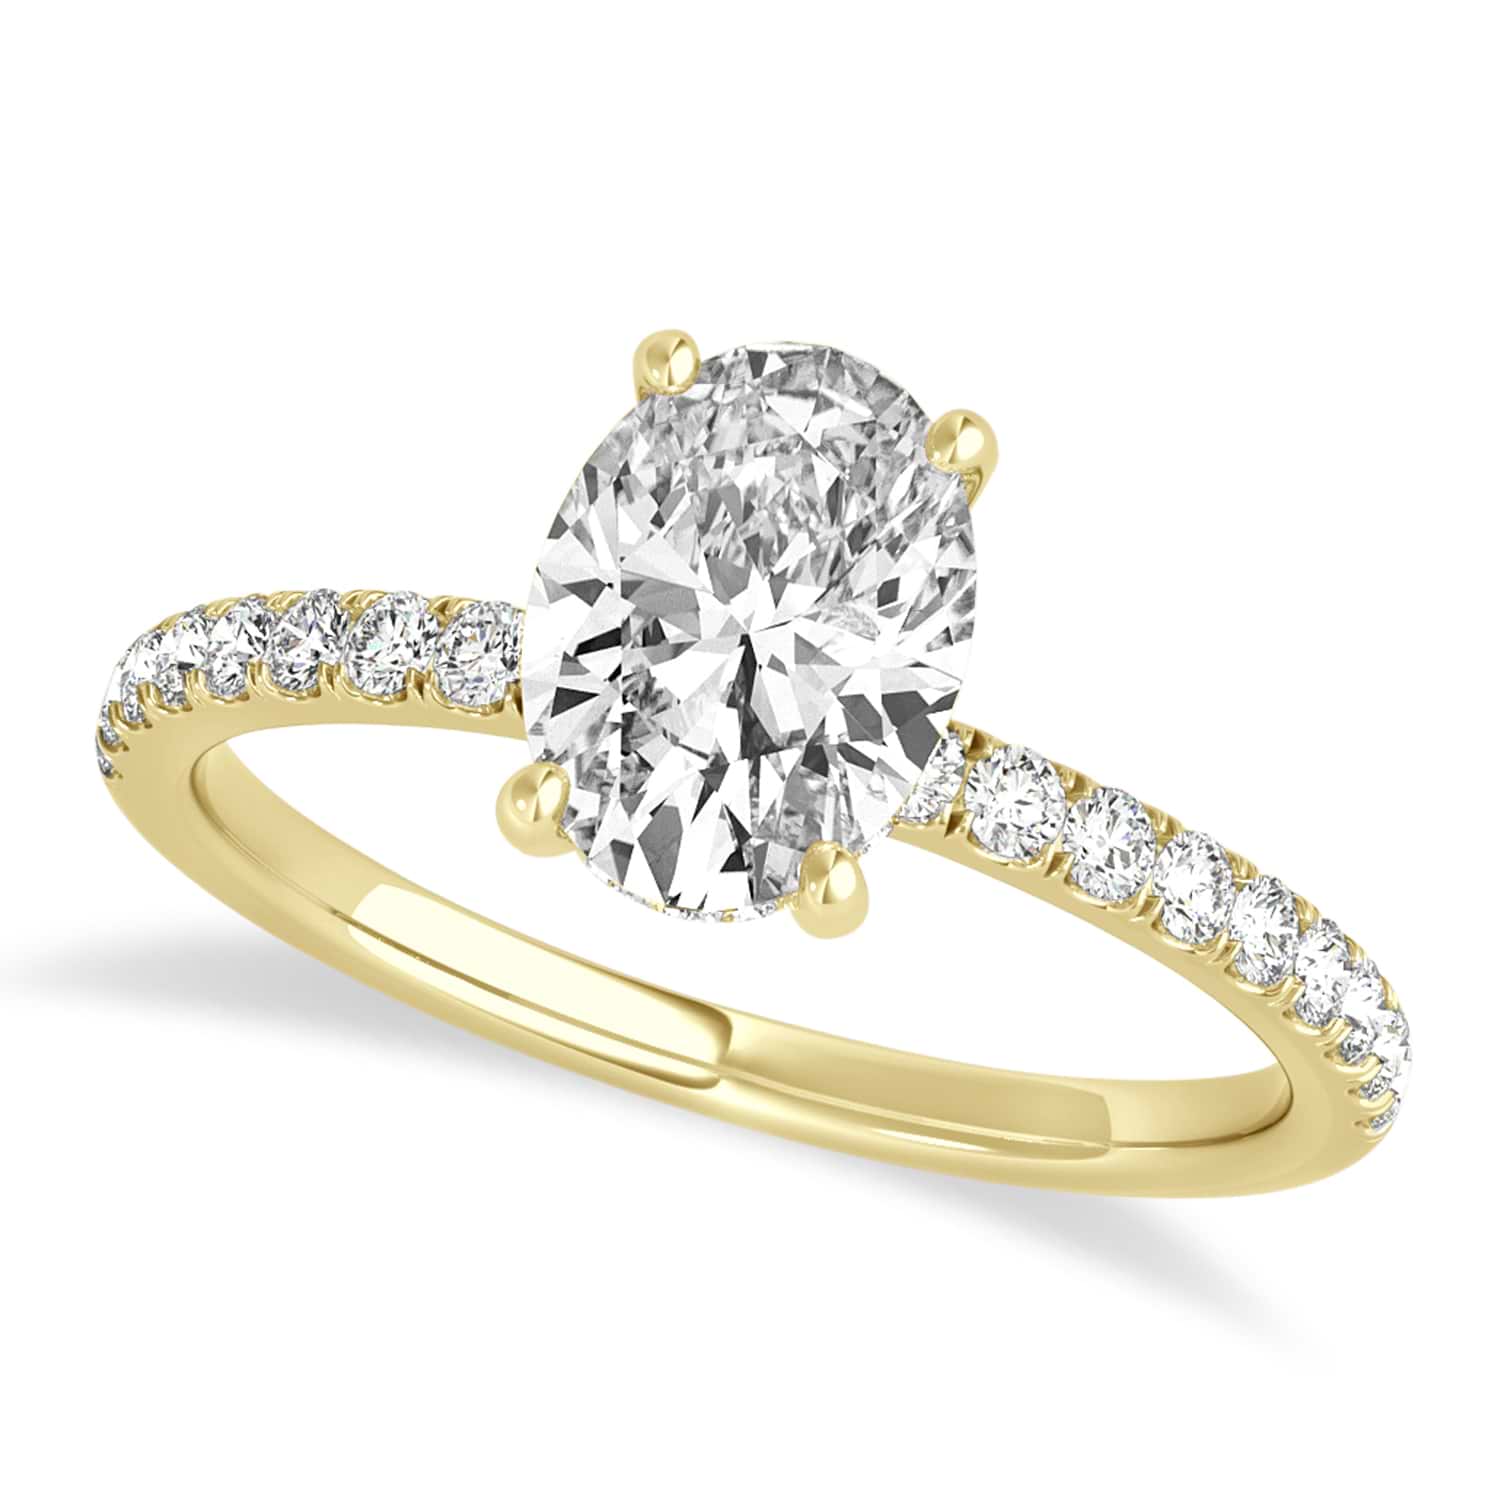 Oval Lab Grown Diamond Single Row Hidden Halo Engagement Ring 14k Yellow Gold (1.50ct)